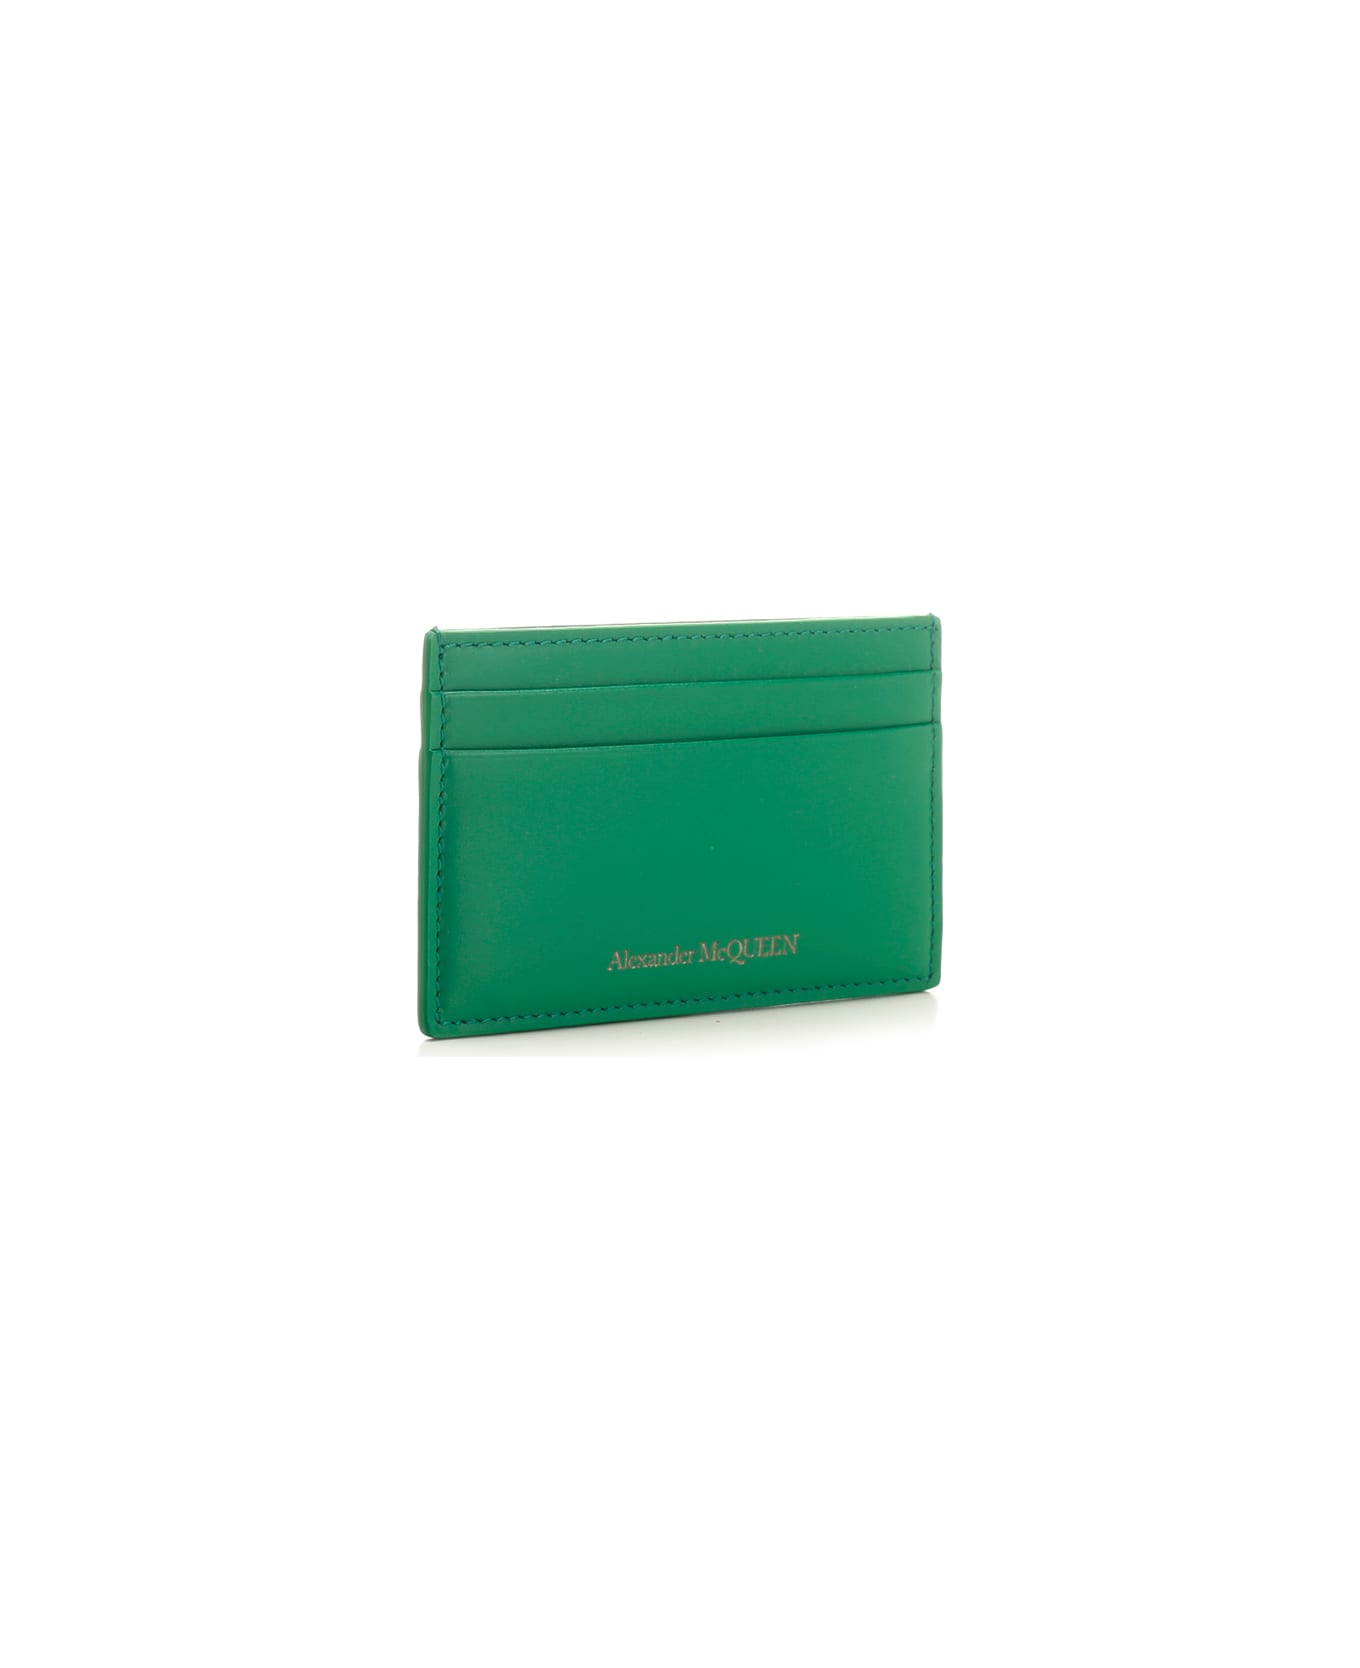 Alexander McQueen Leather Card Holder - VERDE 財布